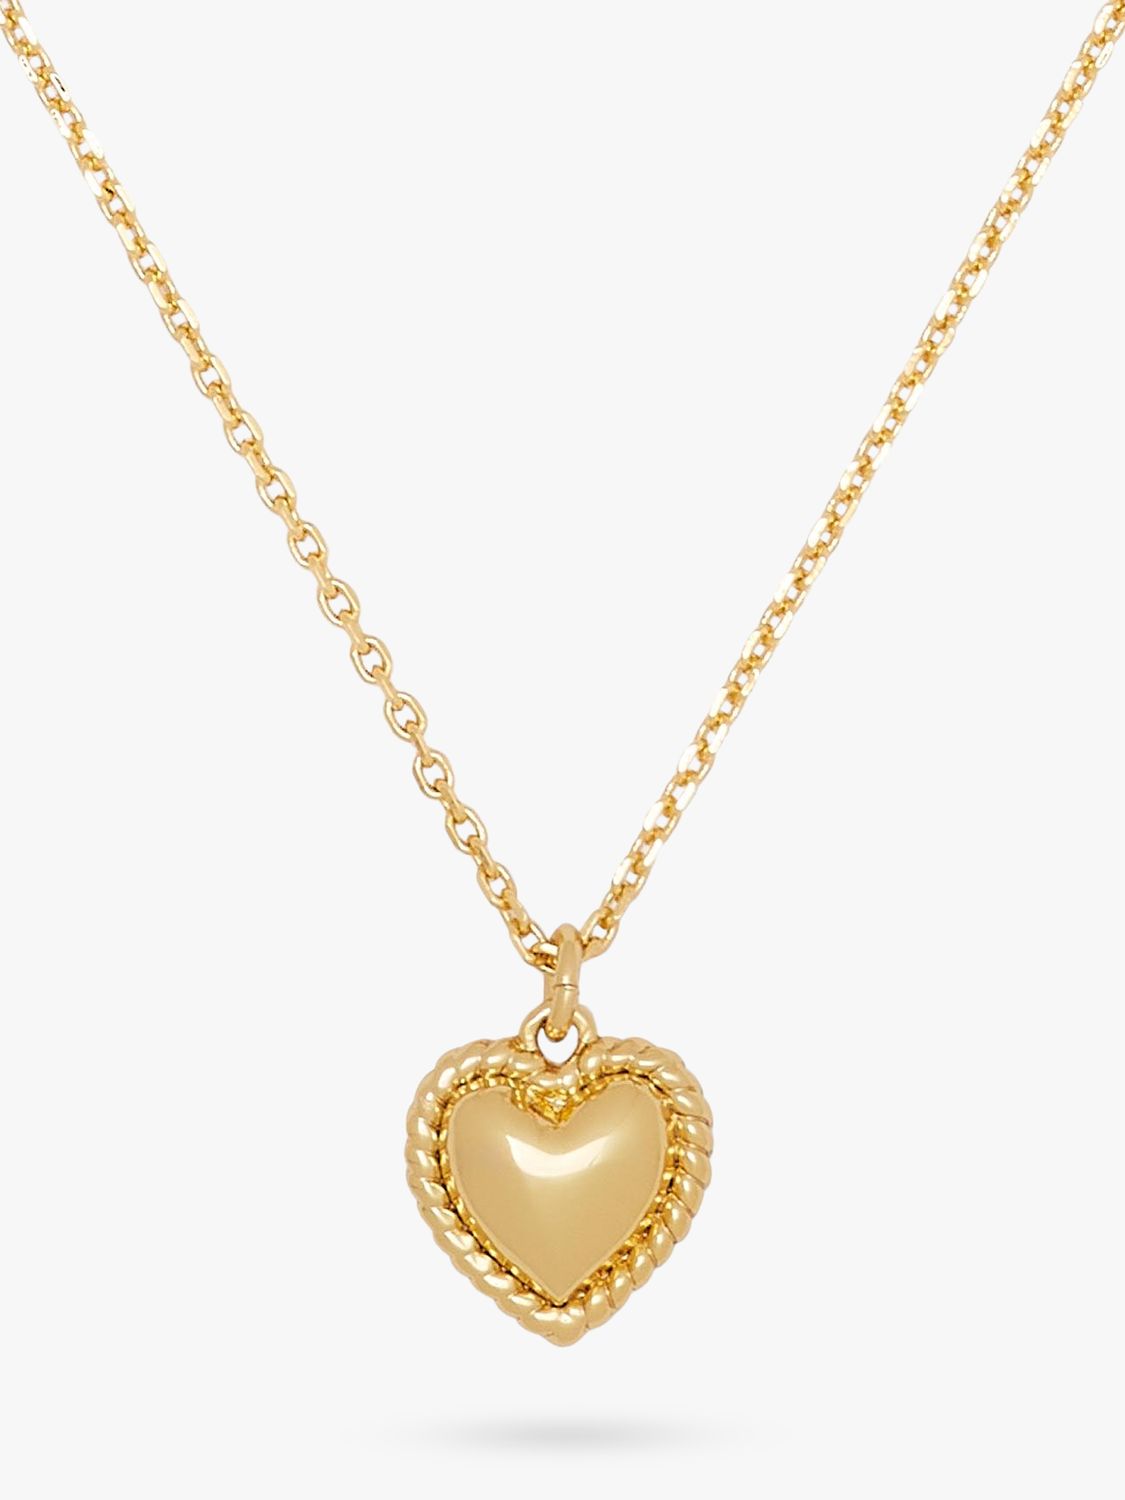 kate spade new york Golden Hour Heart Pendant Necklace, Gold